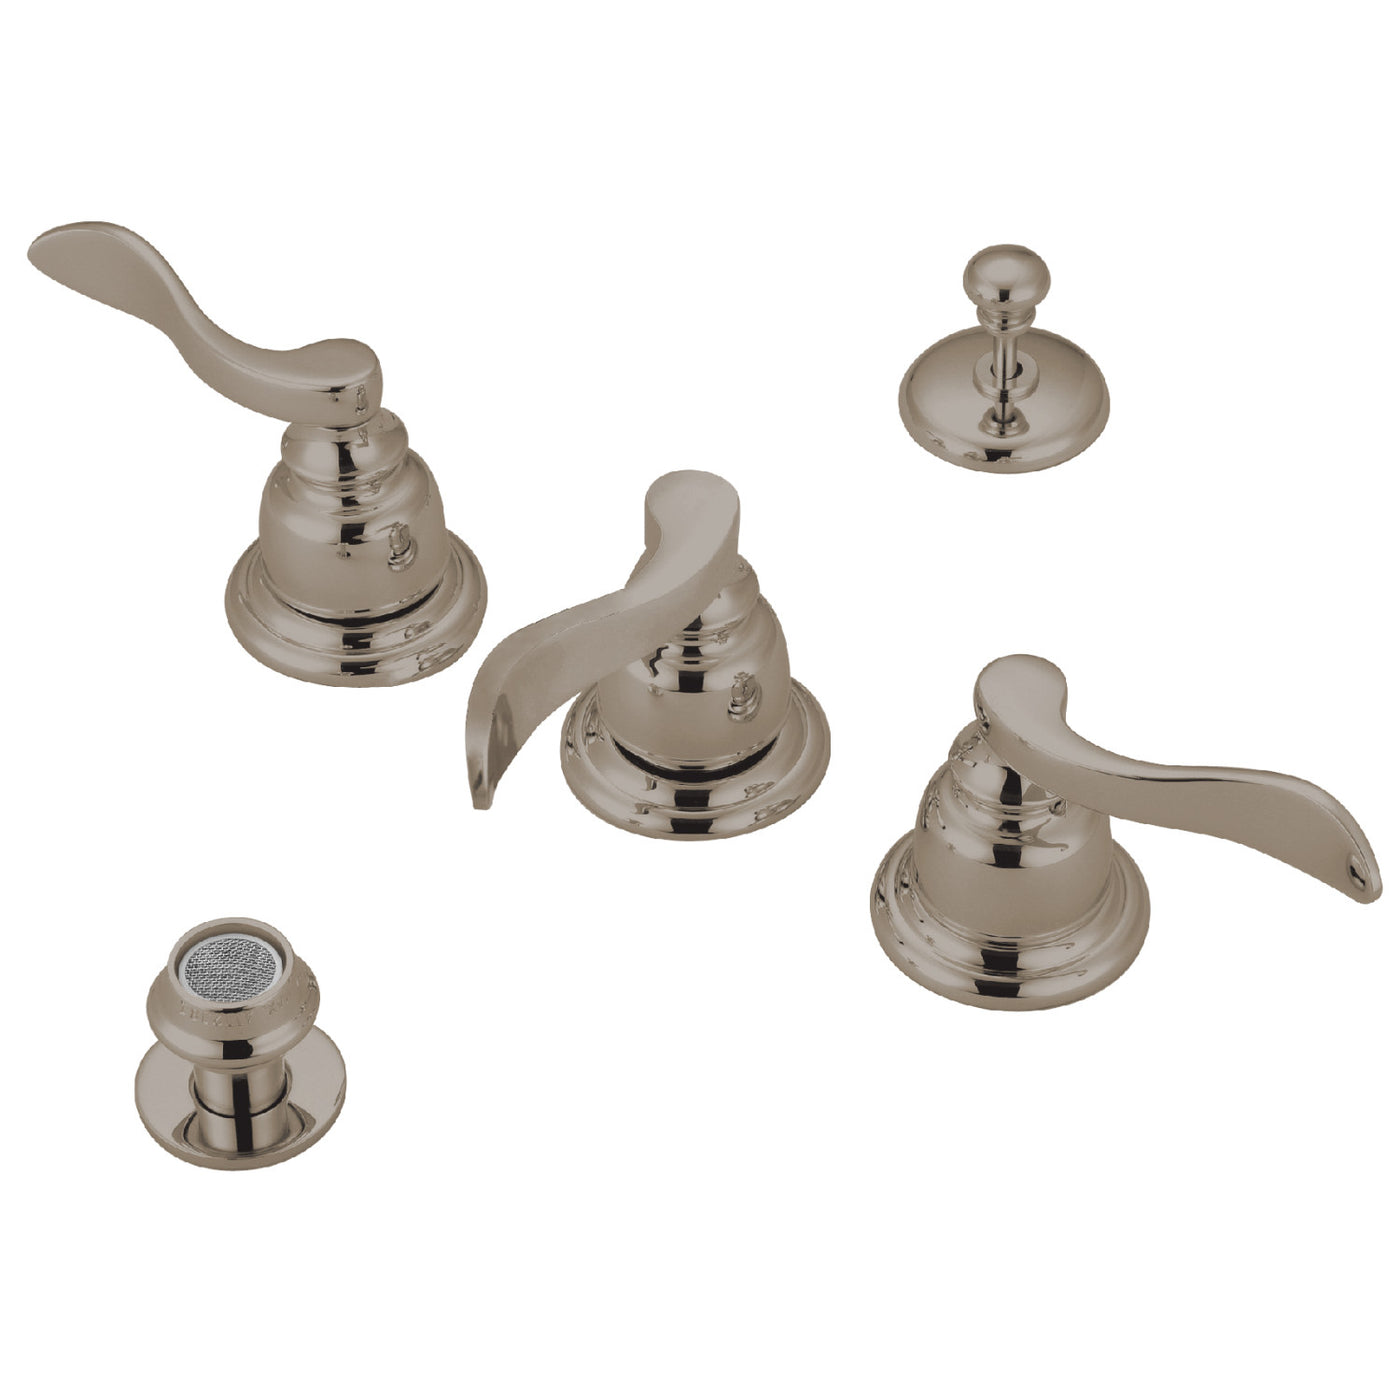 Elements of Design EB8328NFL 3-Handle Bidet Faucet with Brass Pop-Up, Brushed Nickel